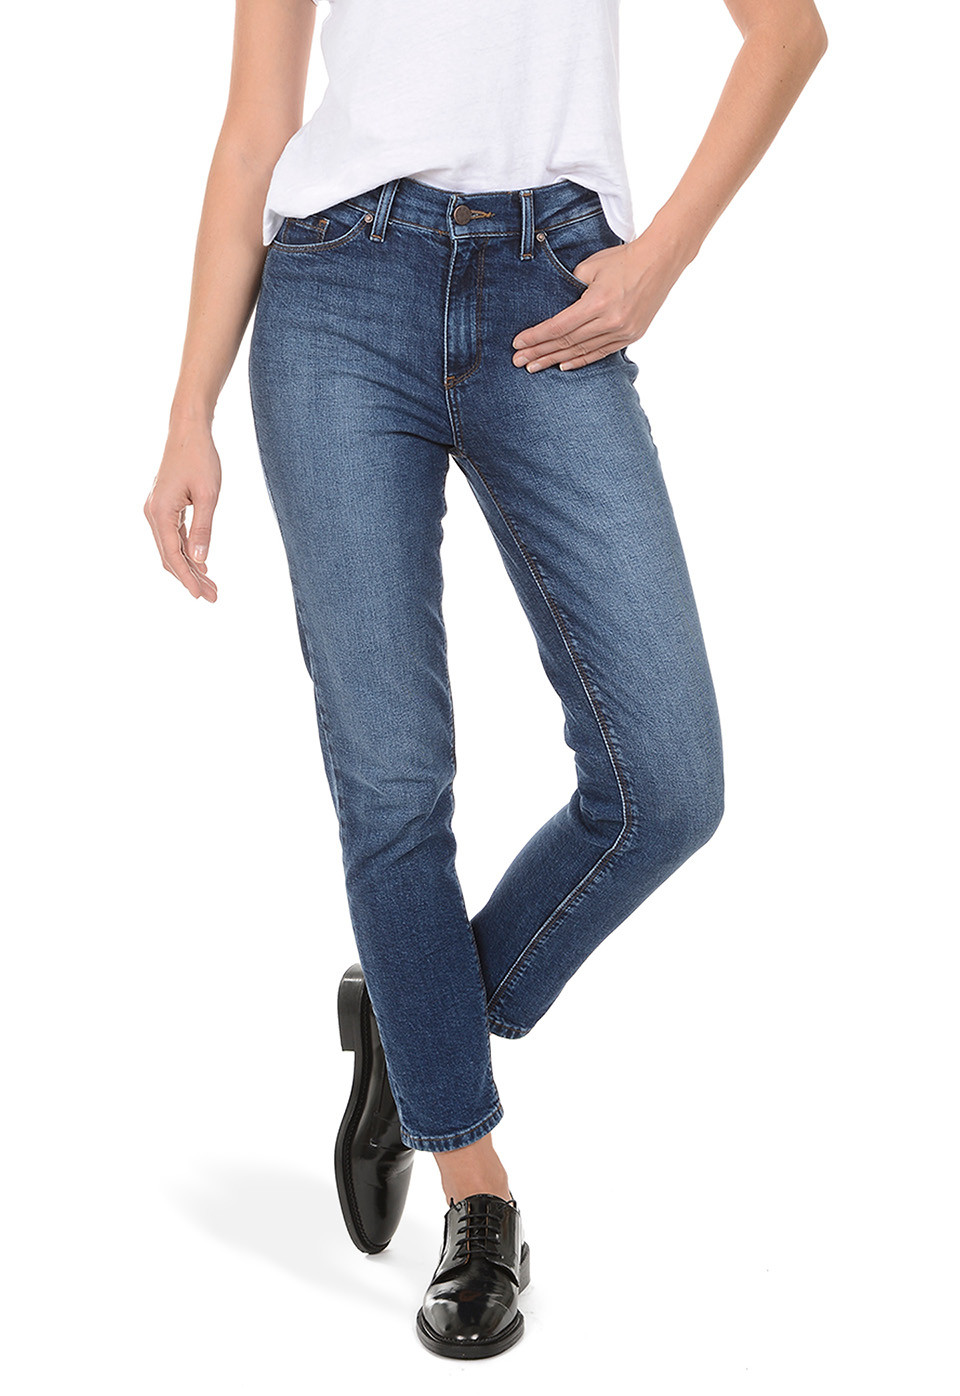 thin denim jeans